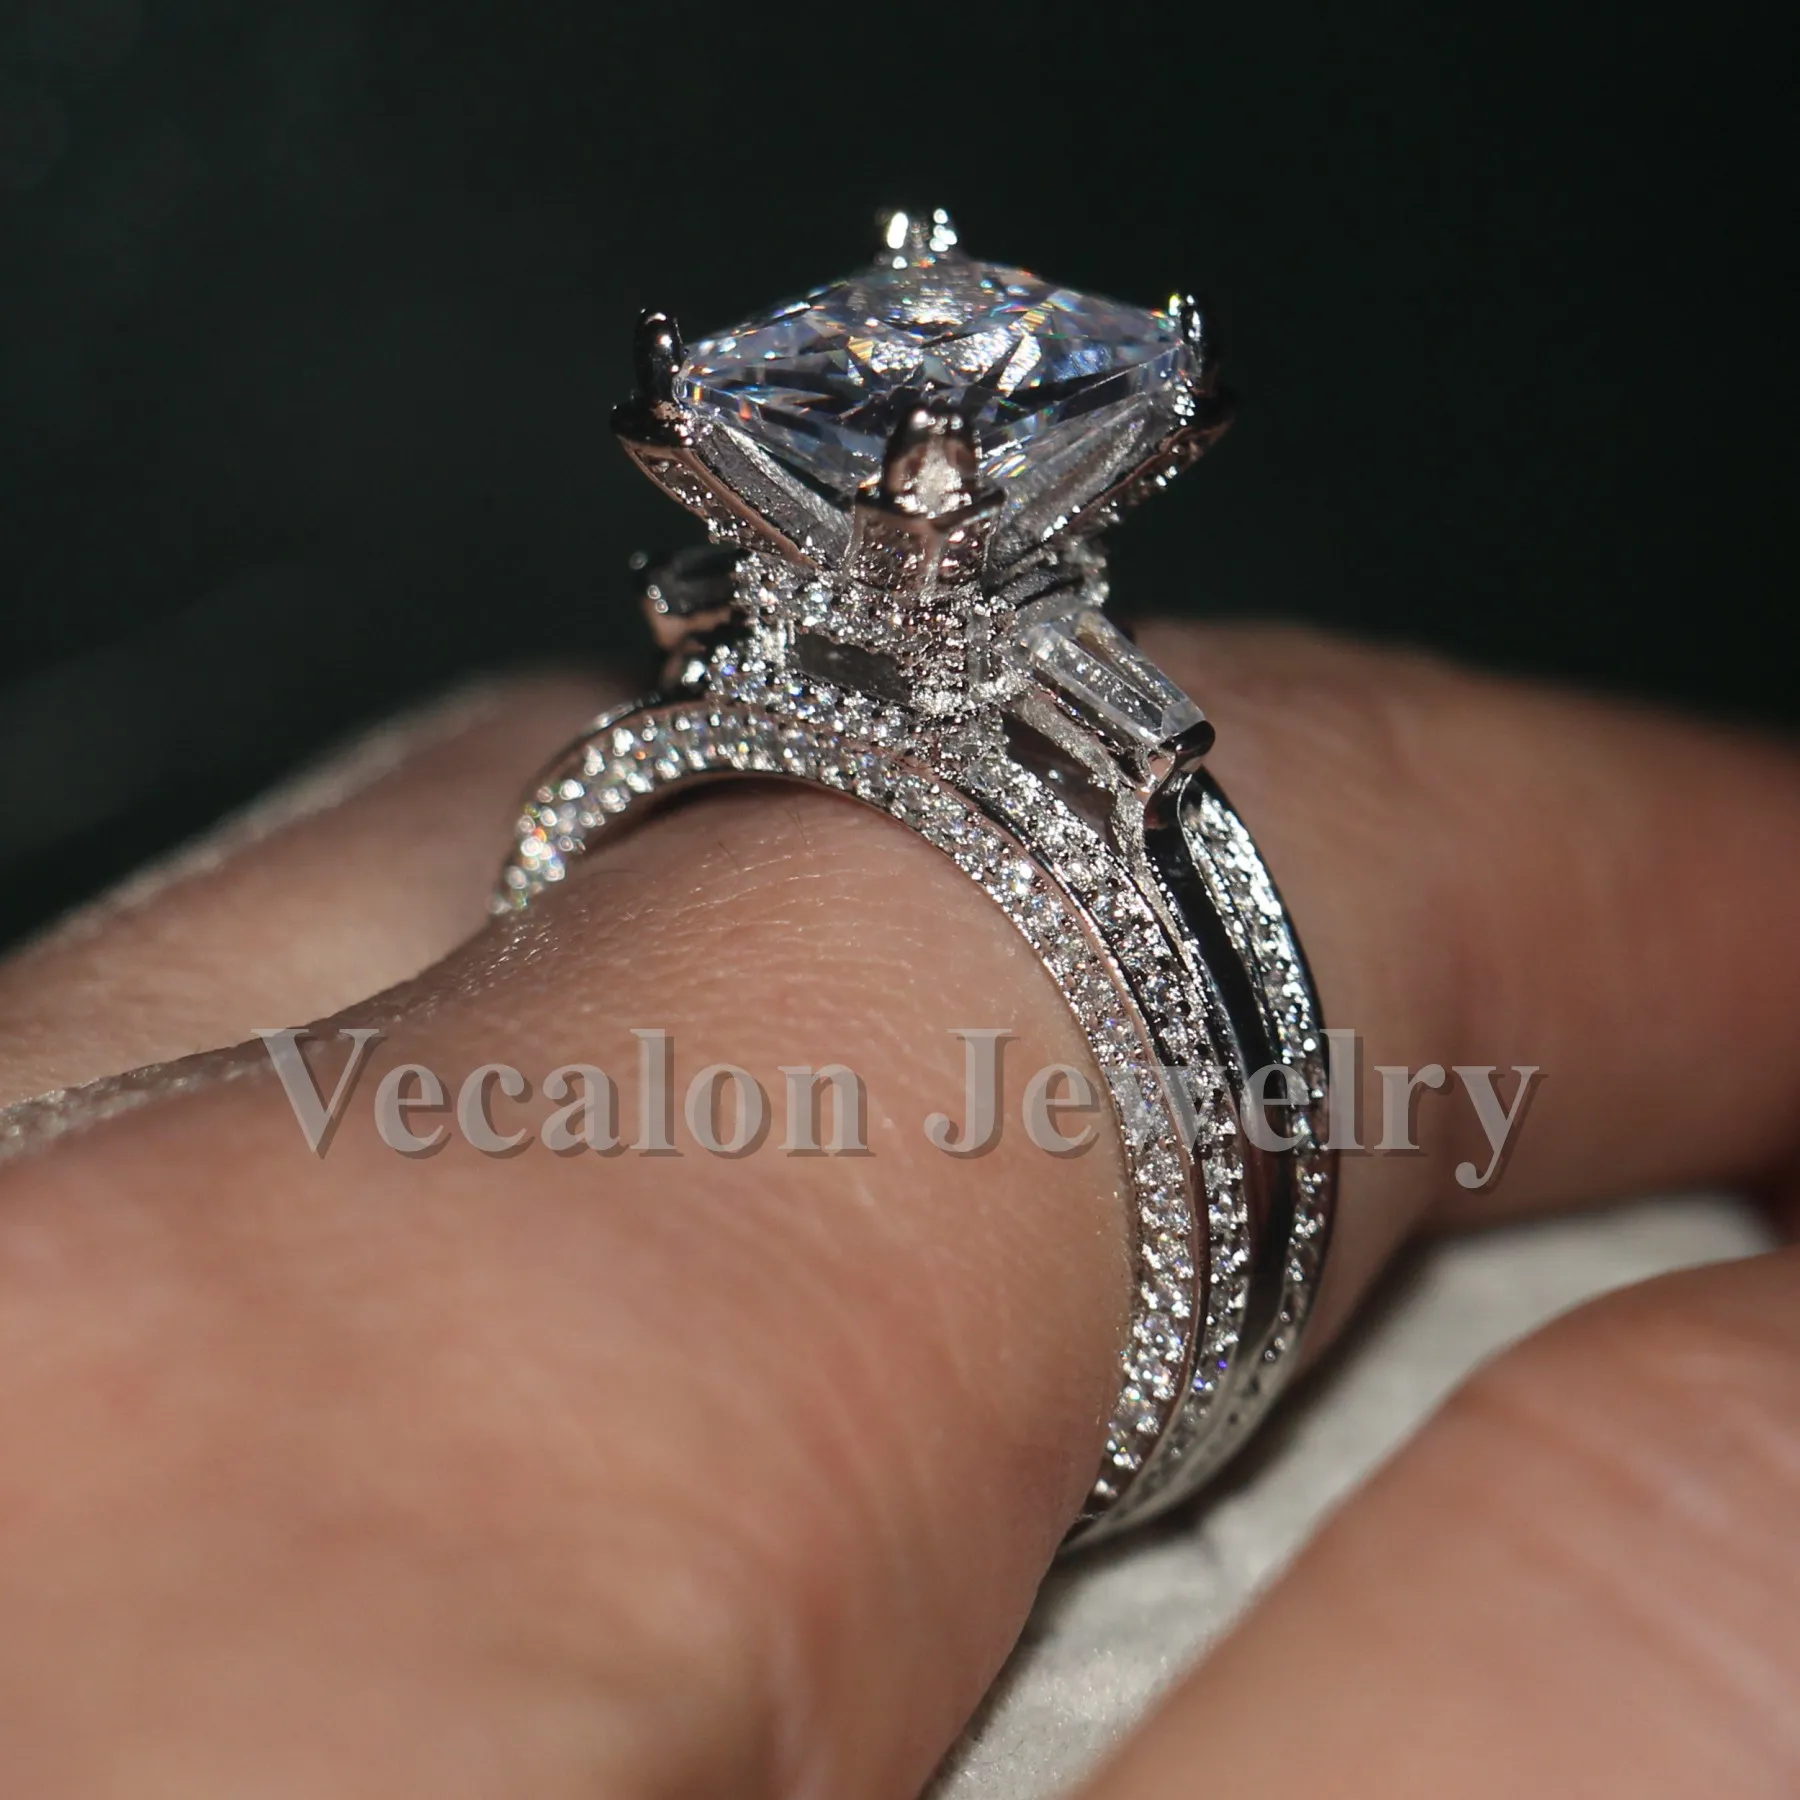 Vecalon 에펠 탑 여성 큰 보석 반지 10ct 5A 지르콘 돌 CZ 925 스털링 실버 약혼 결혼 밴드 반지